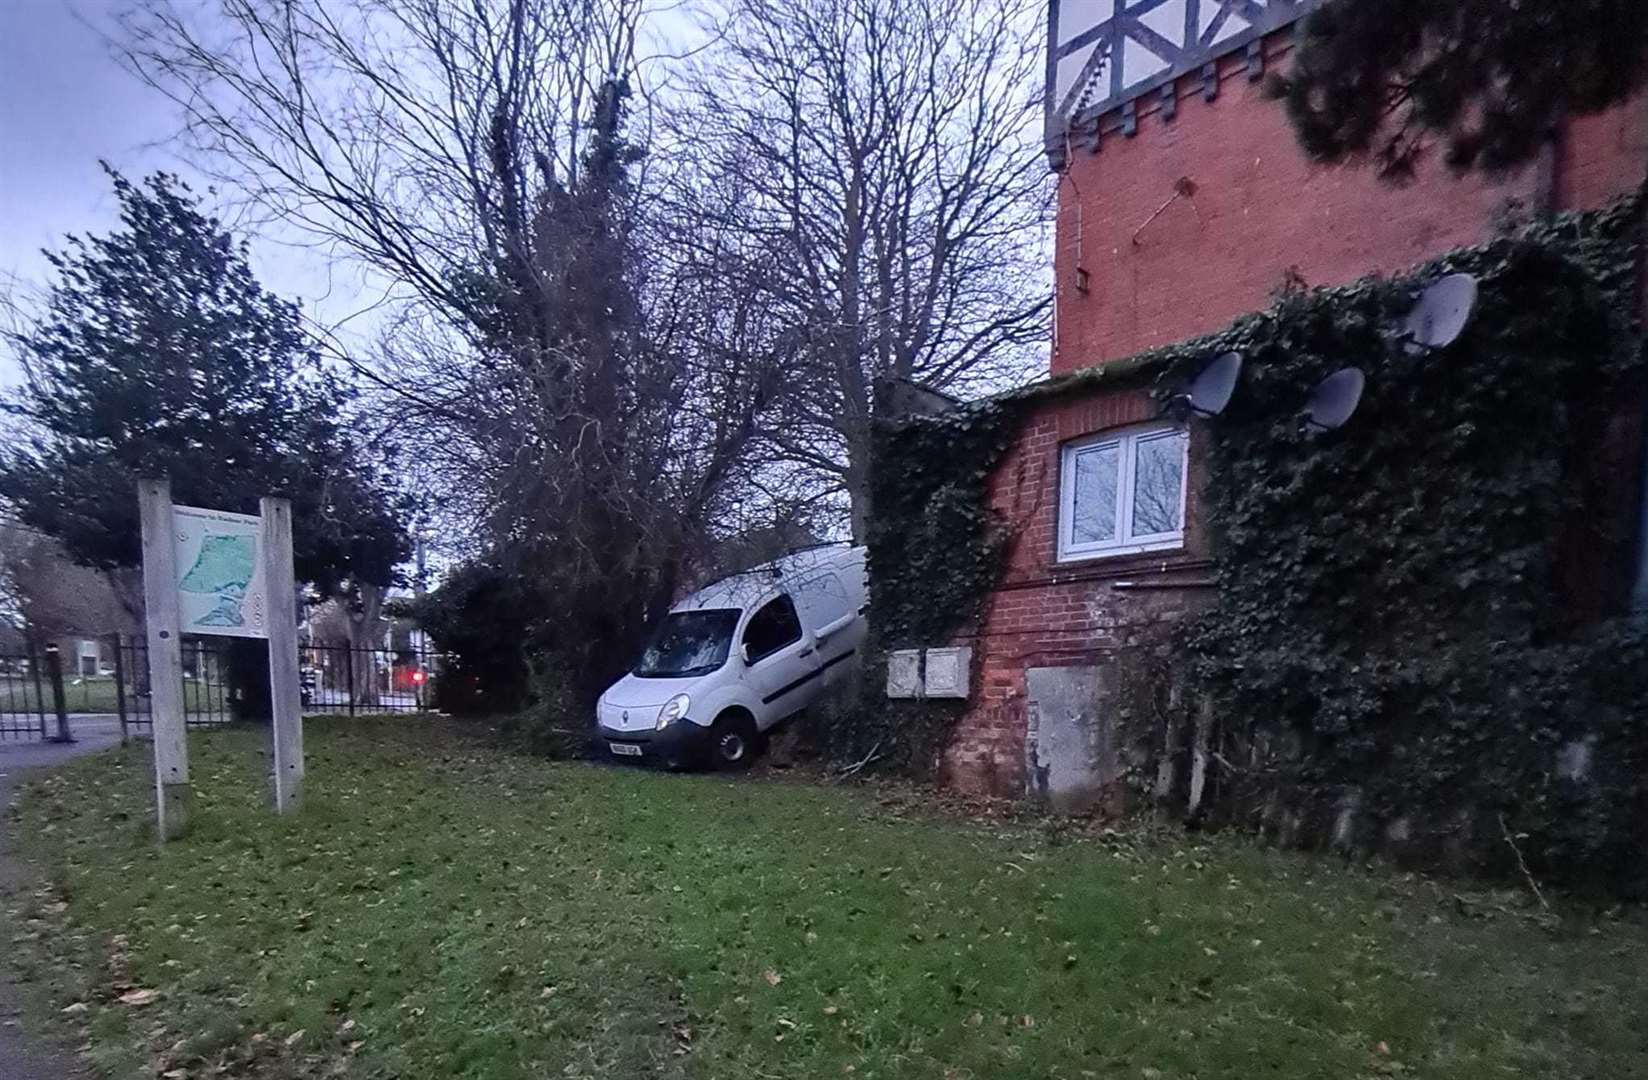 Van wedged in a hedge in Radnor Park, Folkestone. Picture: Mick Davis